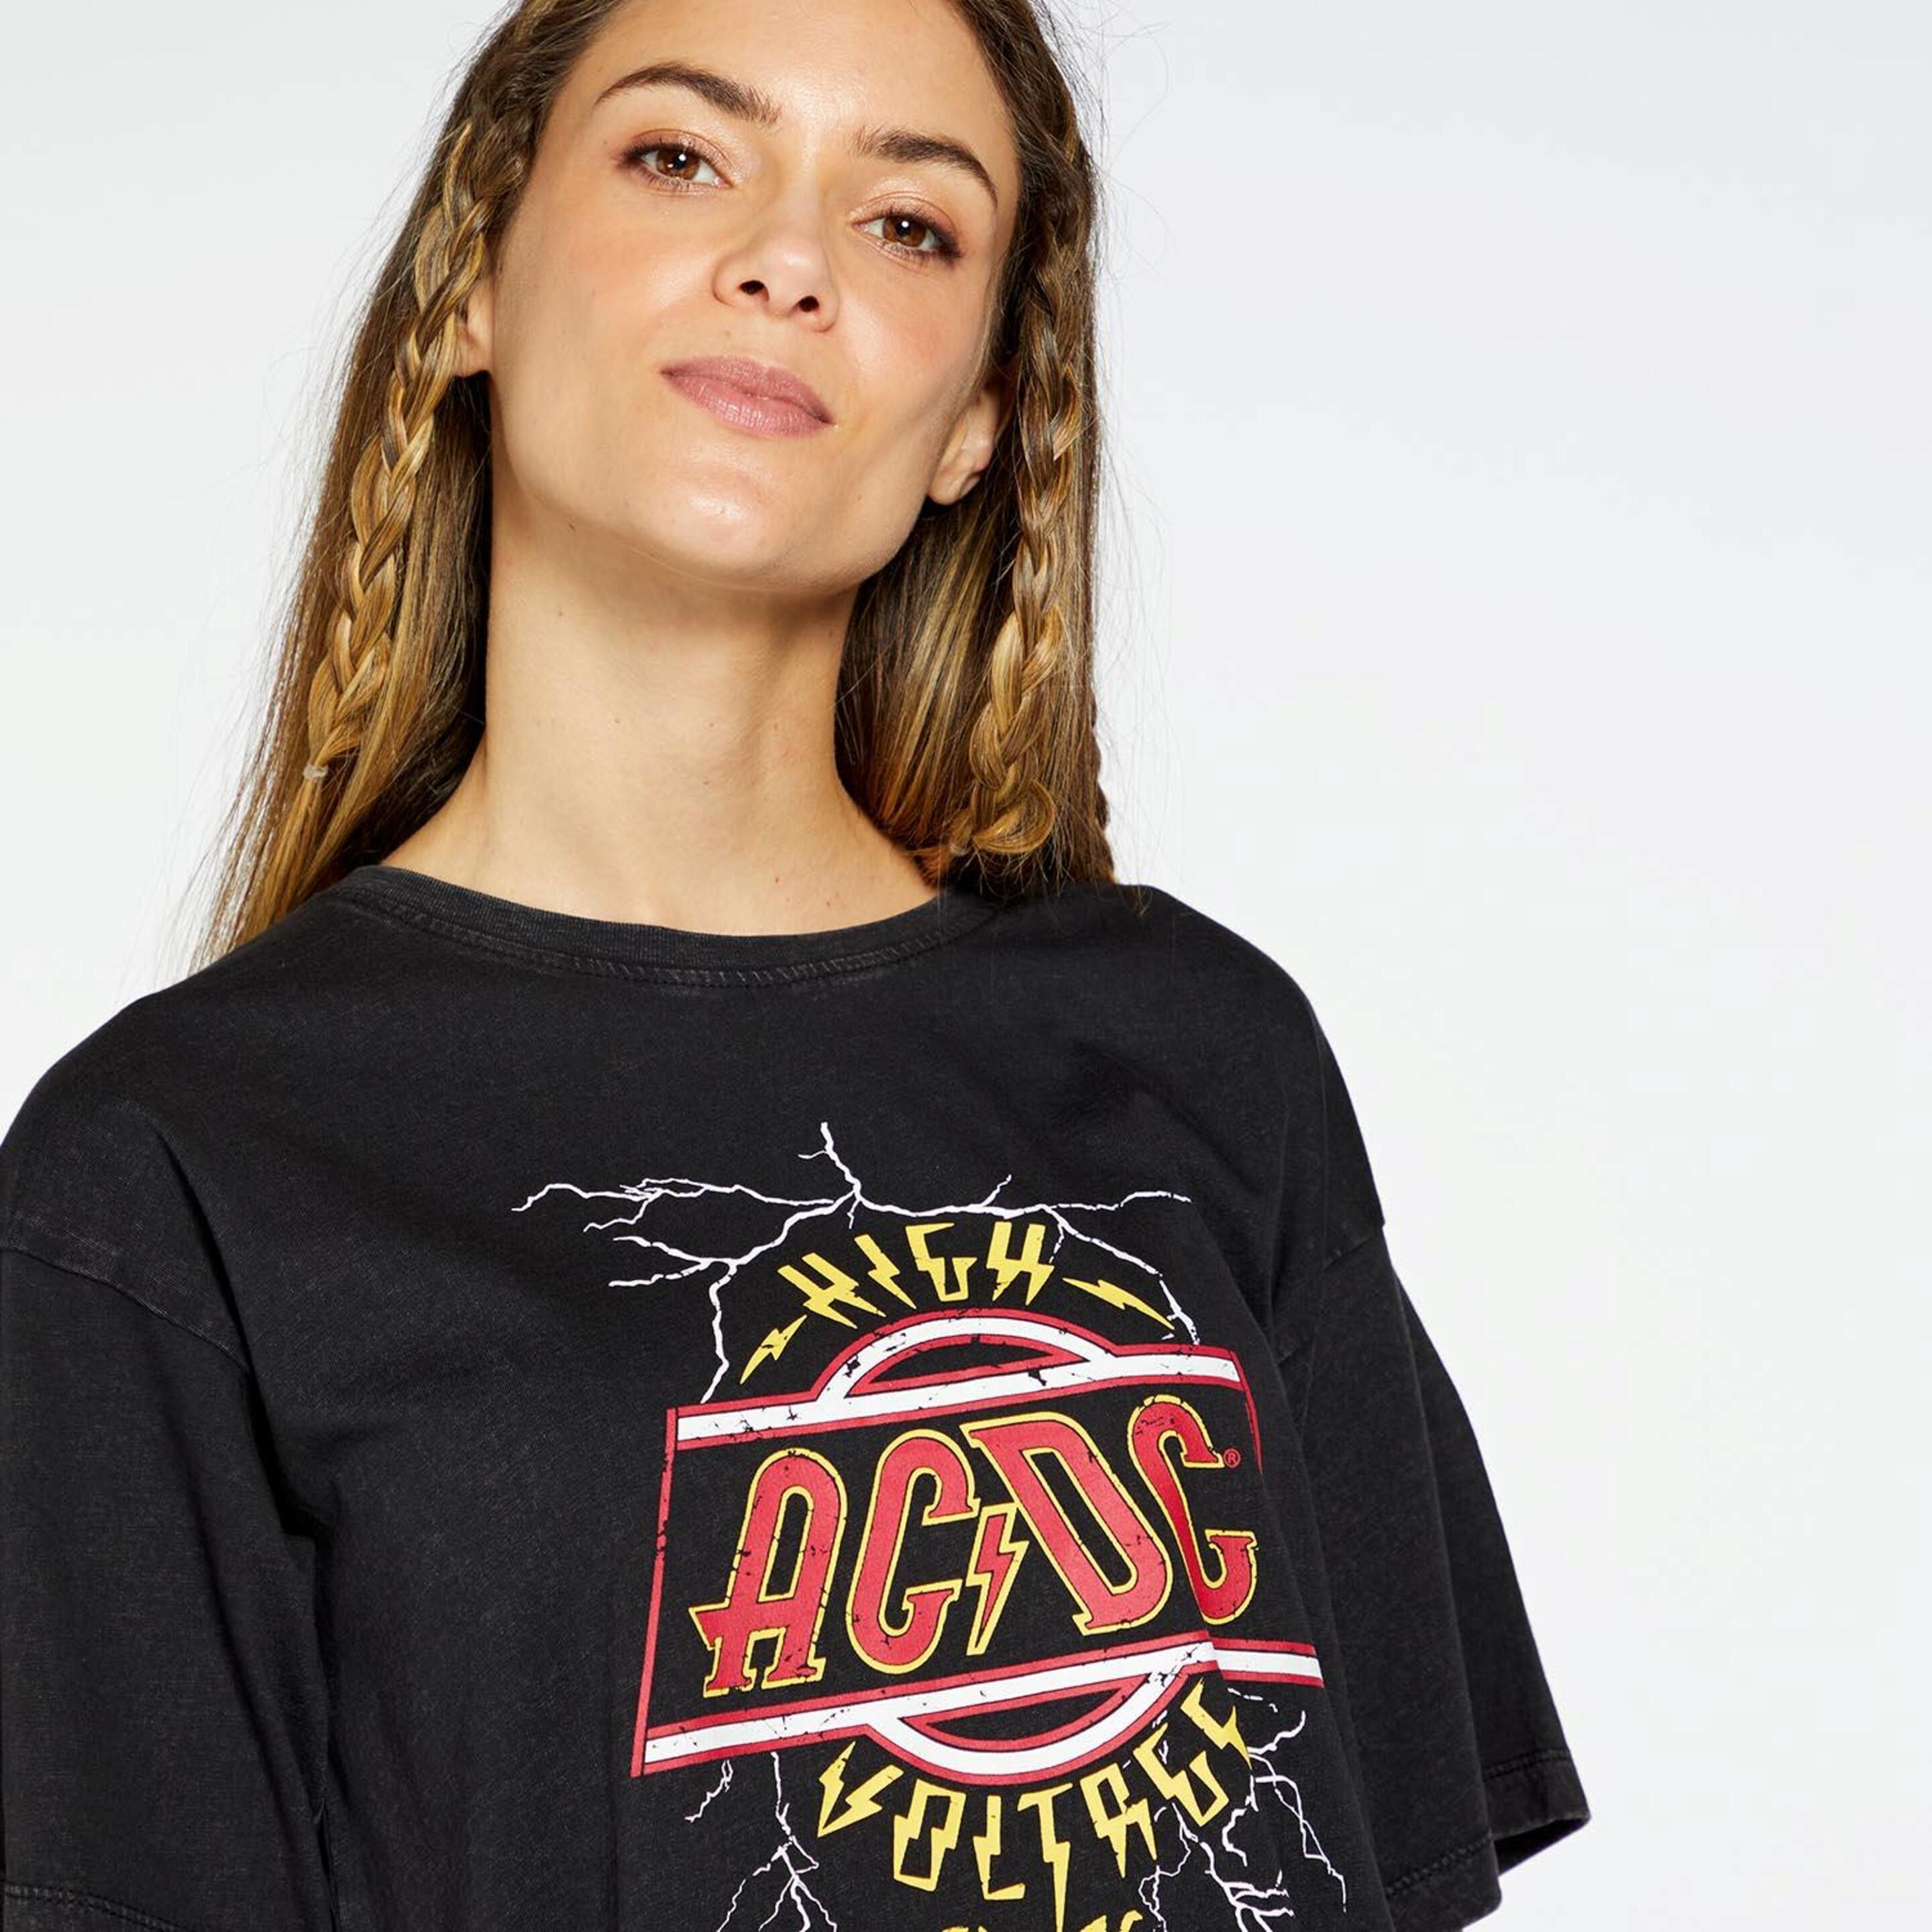 Um Universal Music Sra Camiseta Crop Ac/dc Excl.